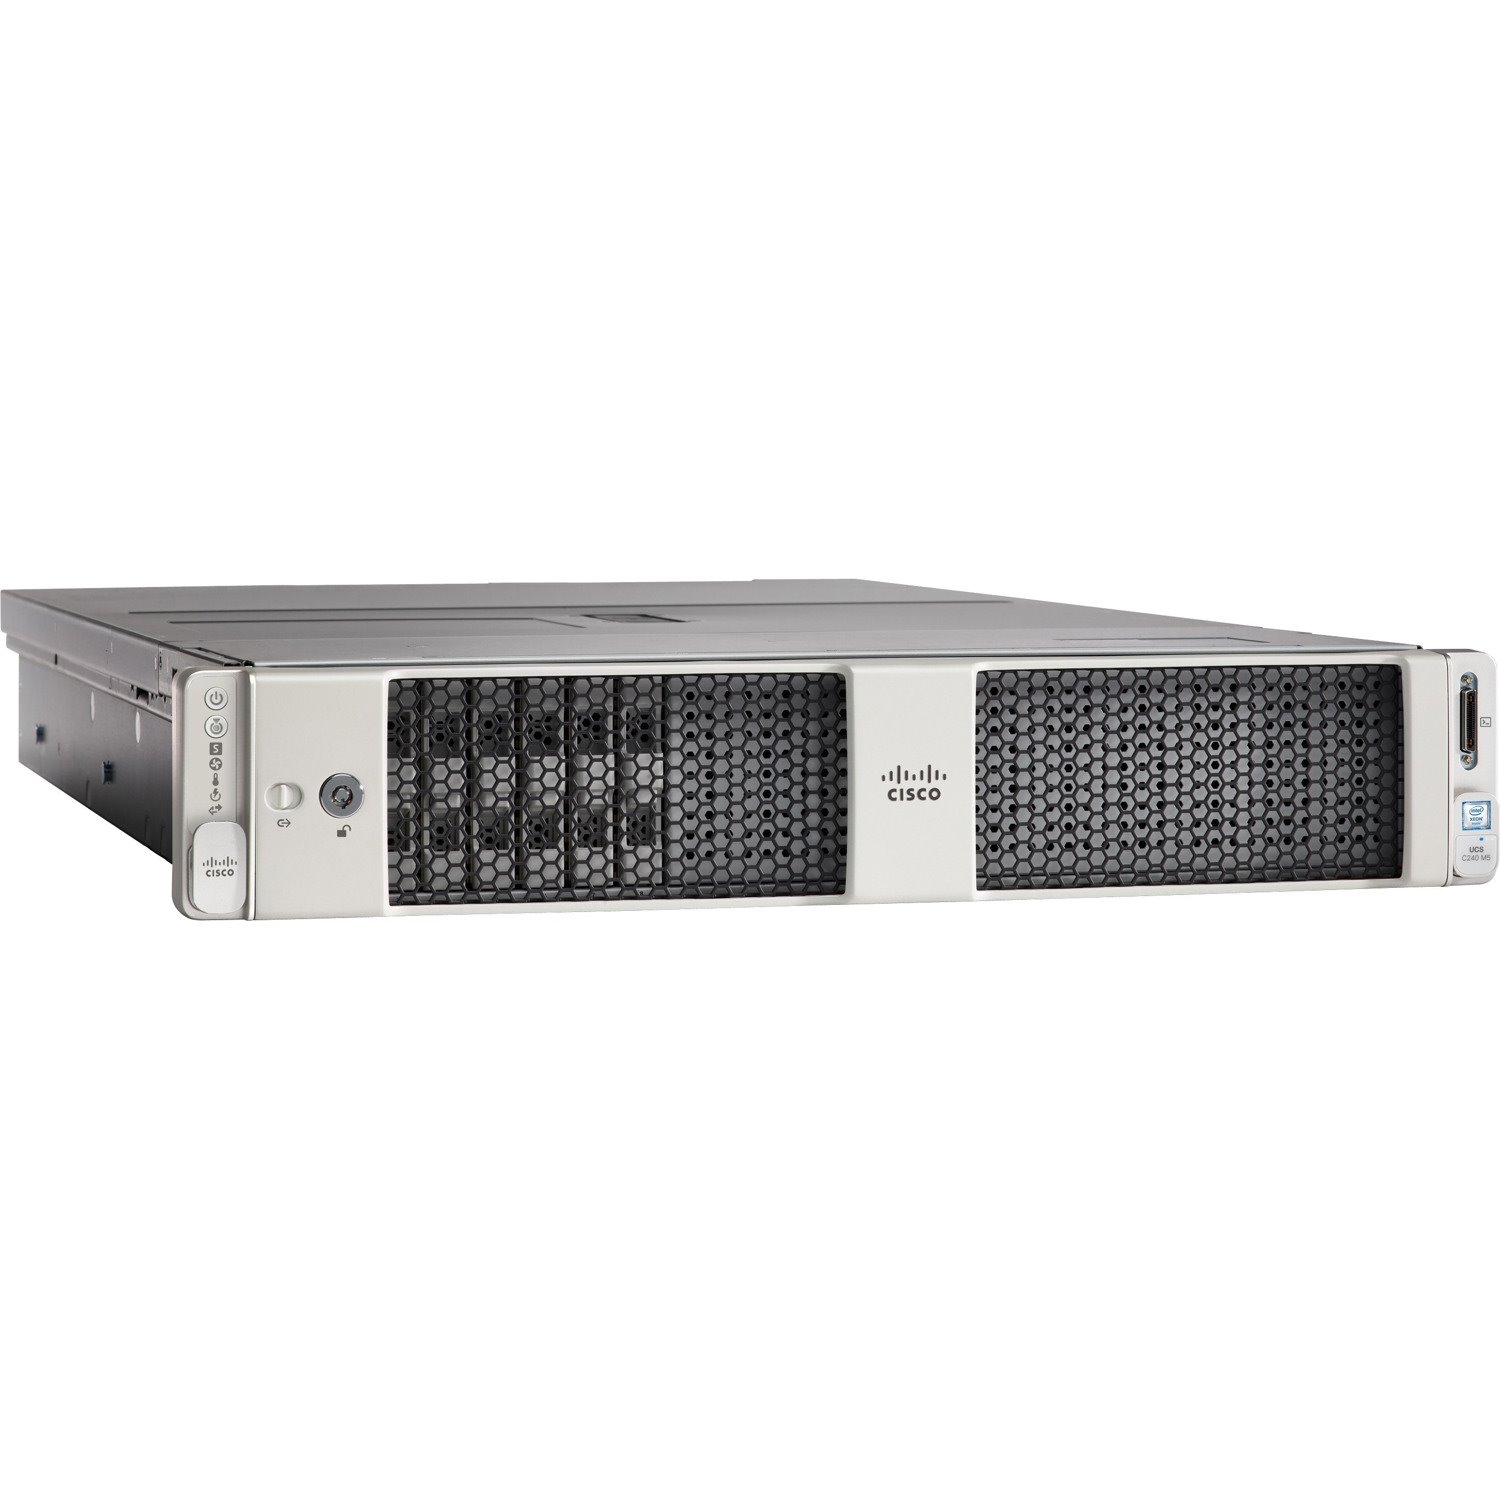 Cisco C240 M5 2U Rack-mountable Server - 2 x Intel Xeon Silver 4114 2.20 GHz - 32 GB RAM - 12Gb/s SAS Controller